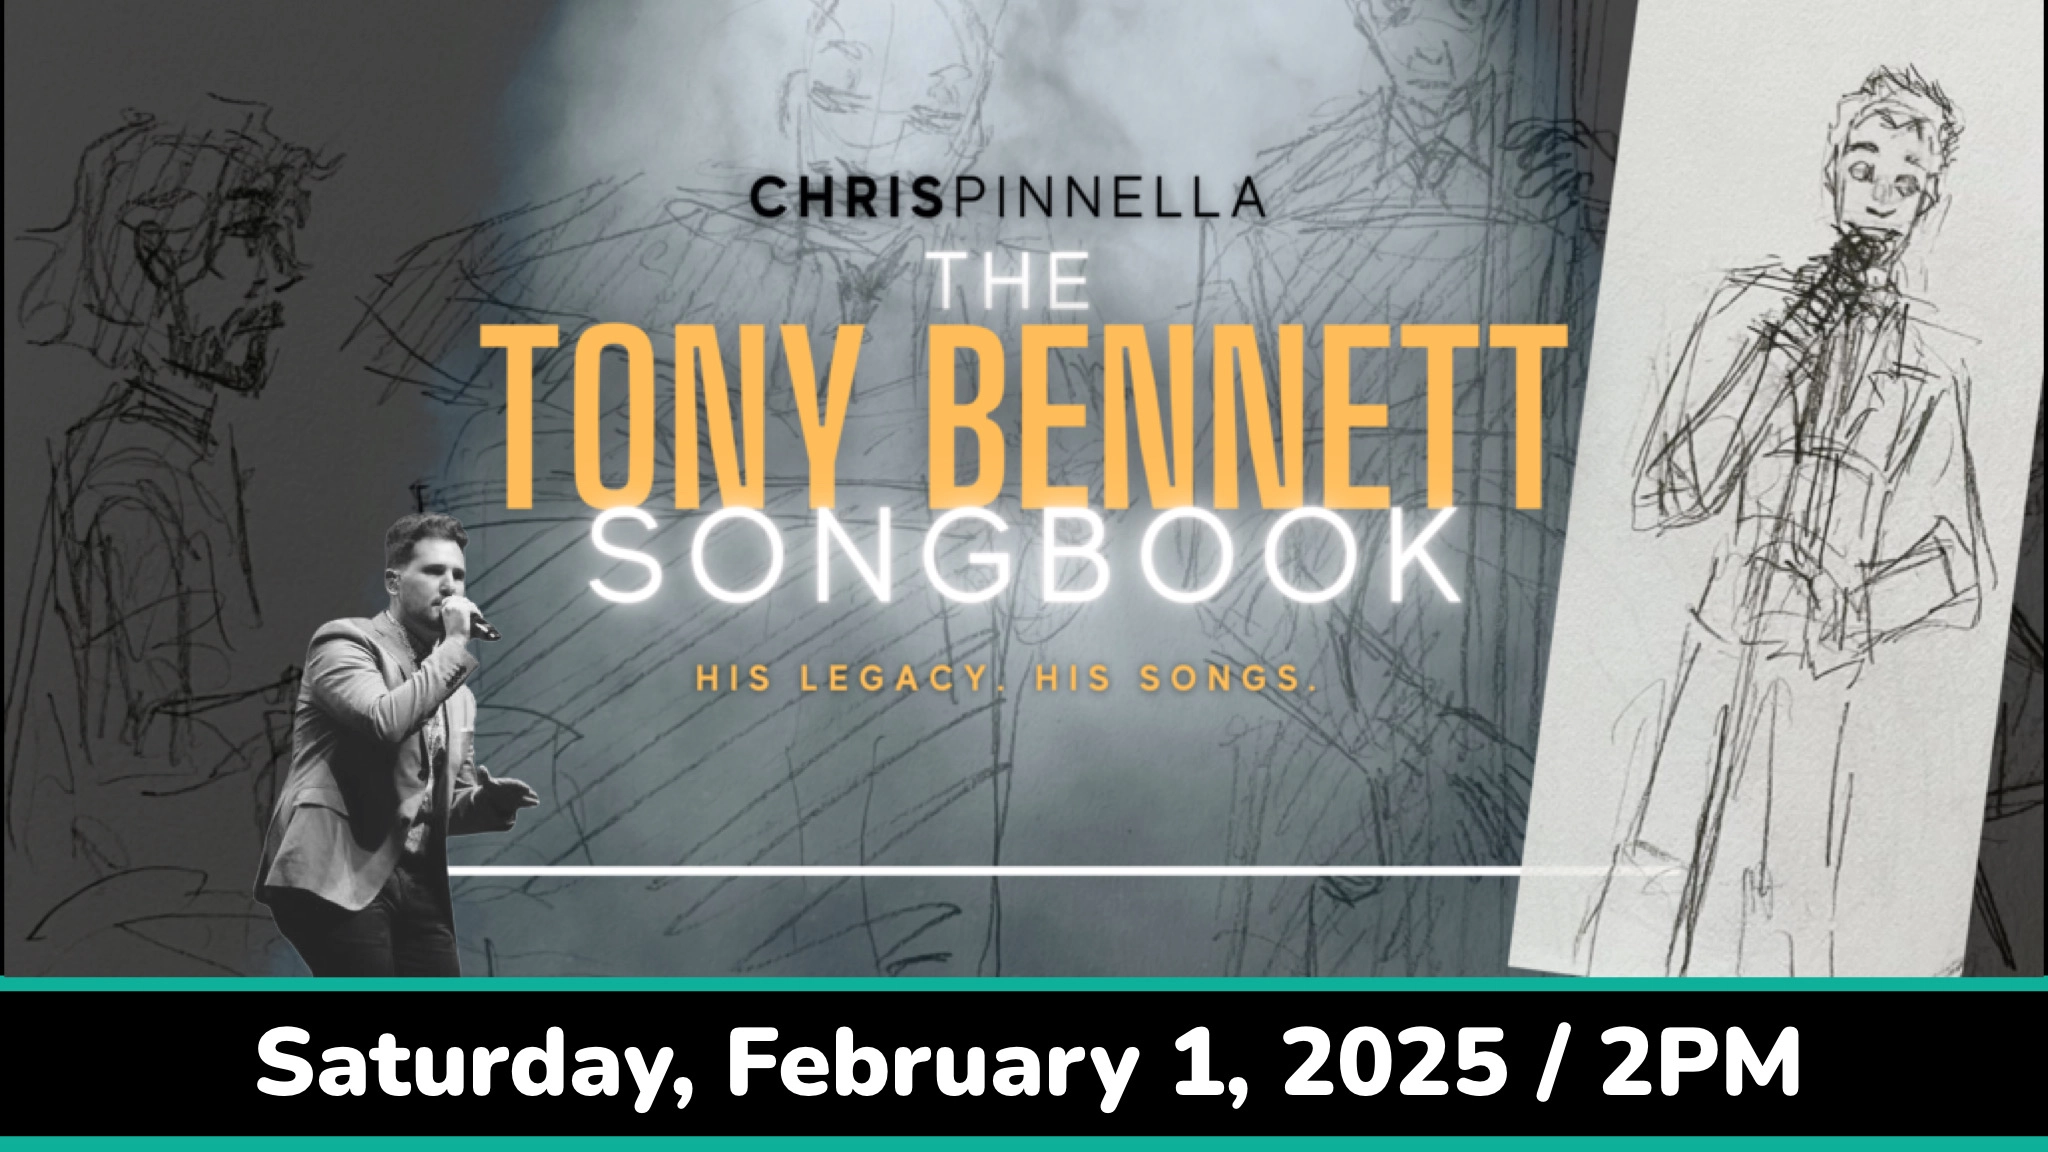 Chris Pinnella - The Tony Bennett Songbook